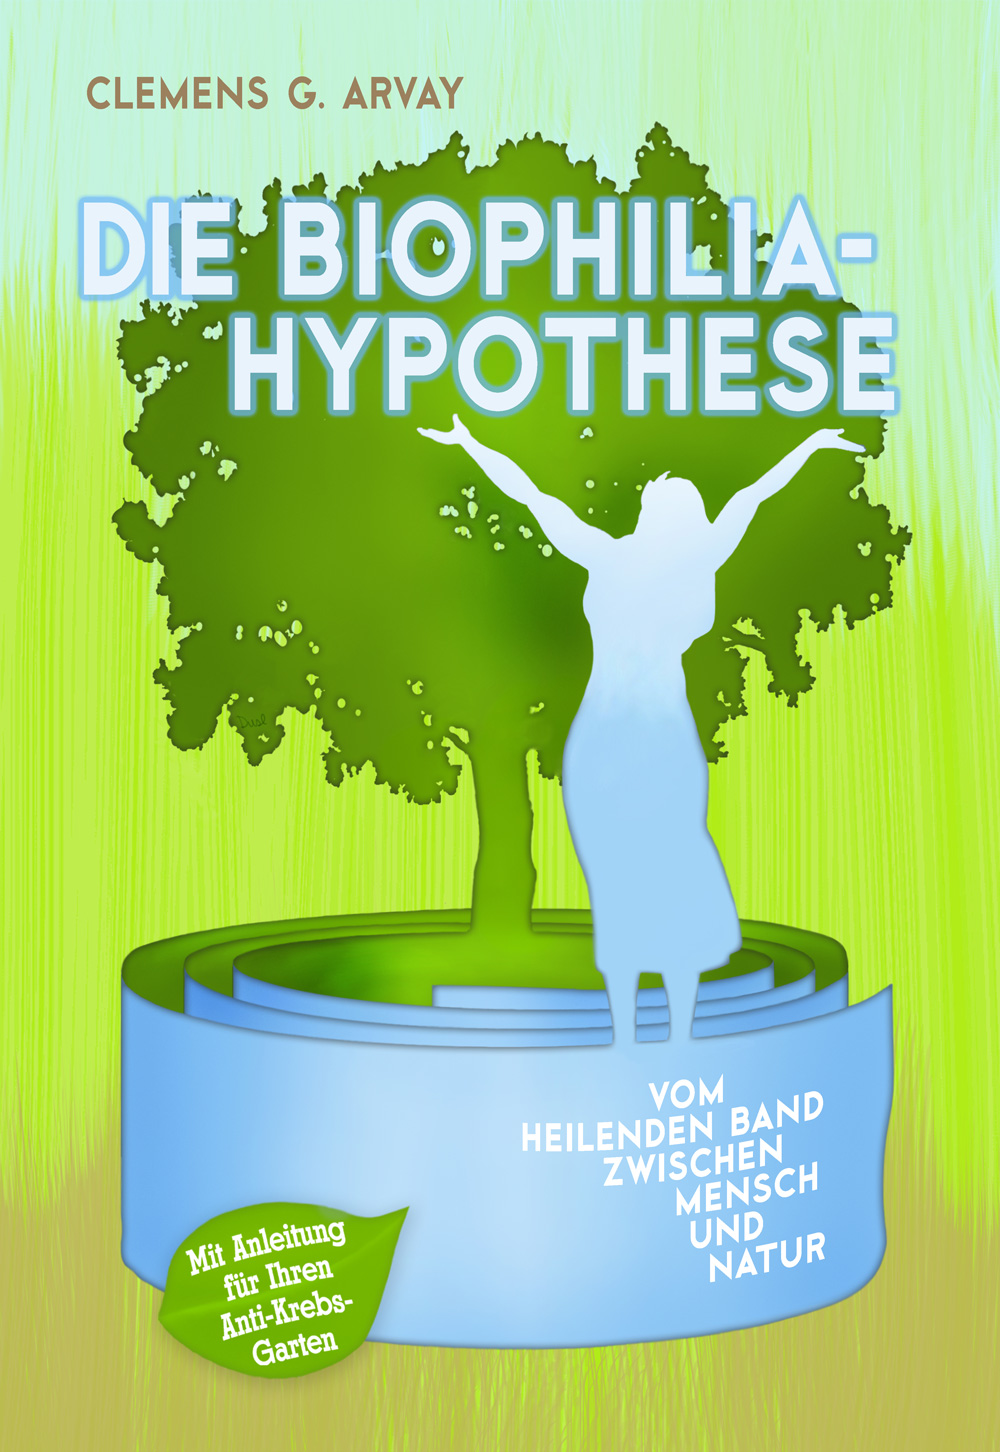 biophilia hypothesis definition psychology